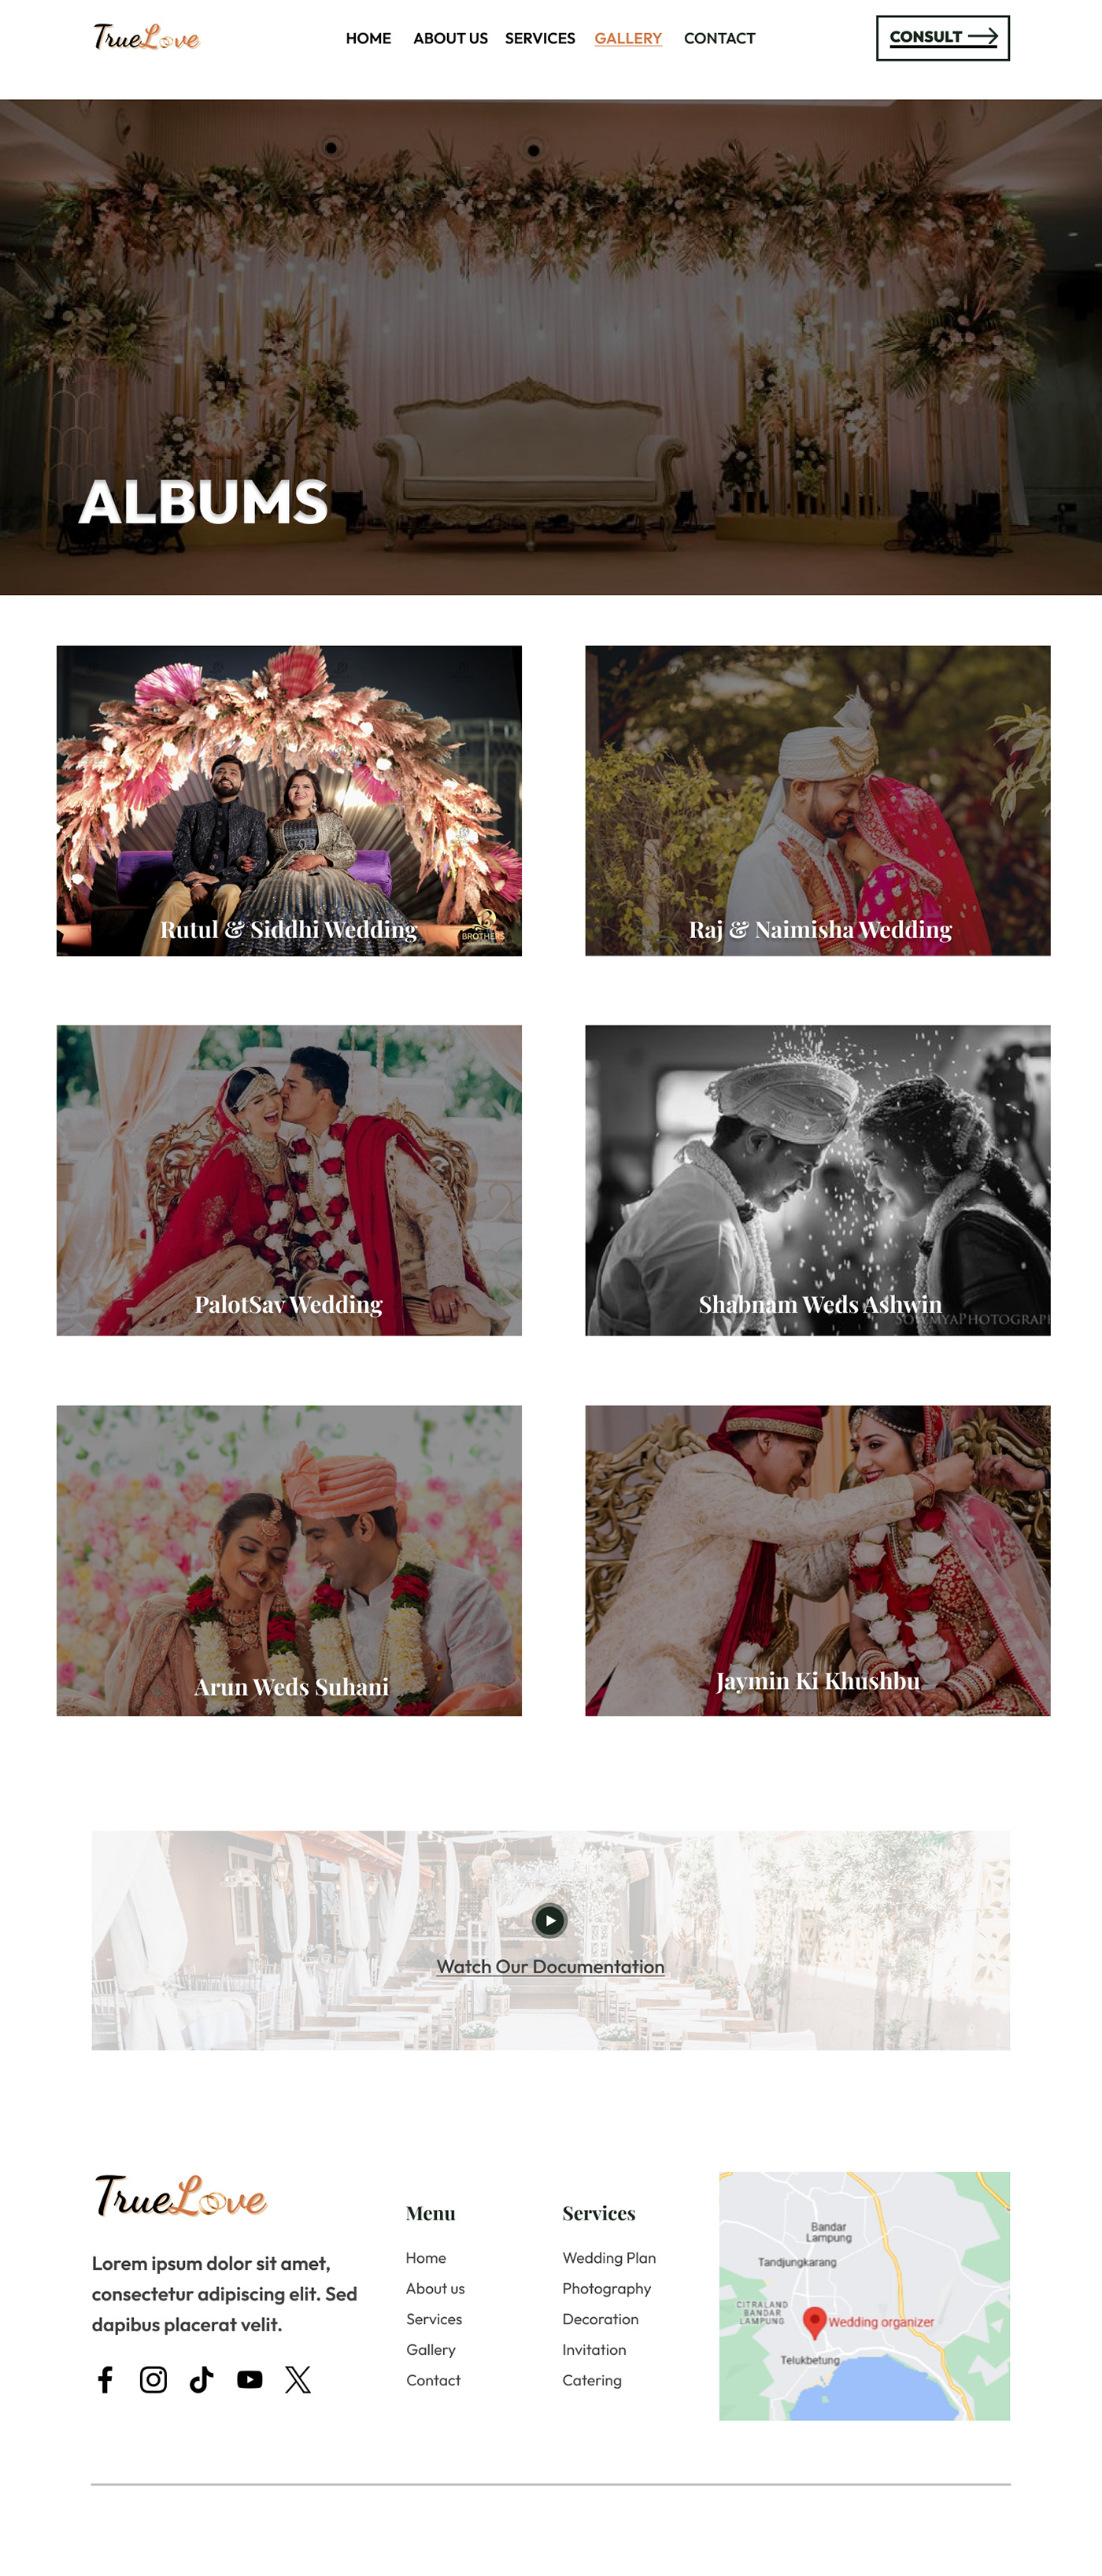 weblayout loginscreen   application editingapp design photoshop Applayout design mobileapplication weddingplanner